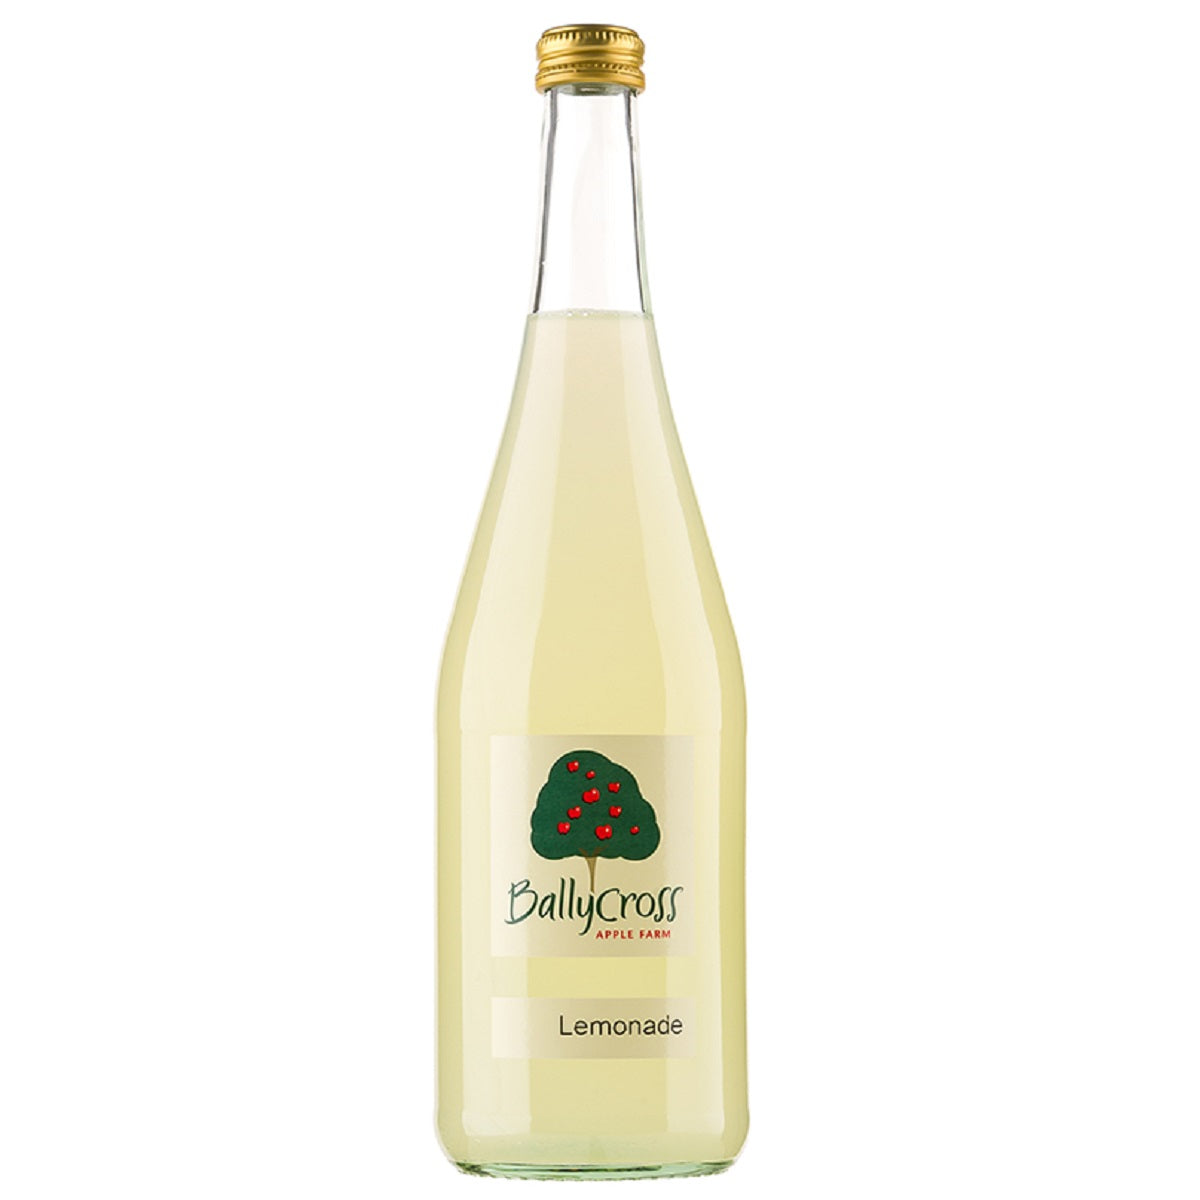 Ballycross Apple Farm Lemonade 750ml